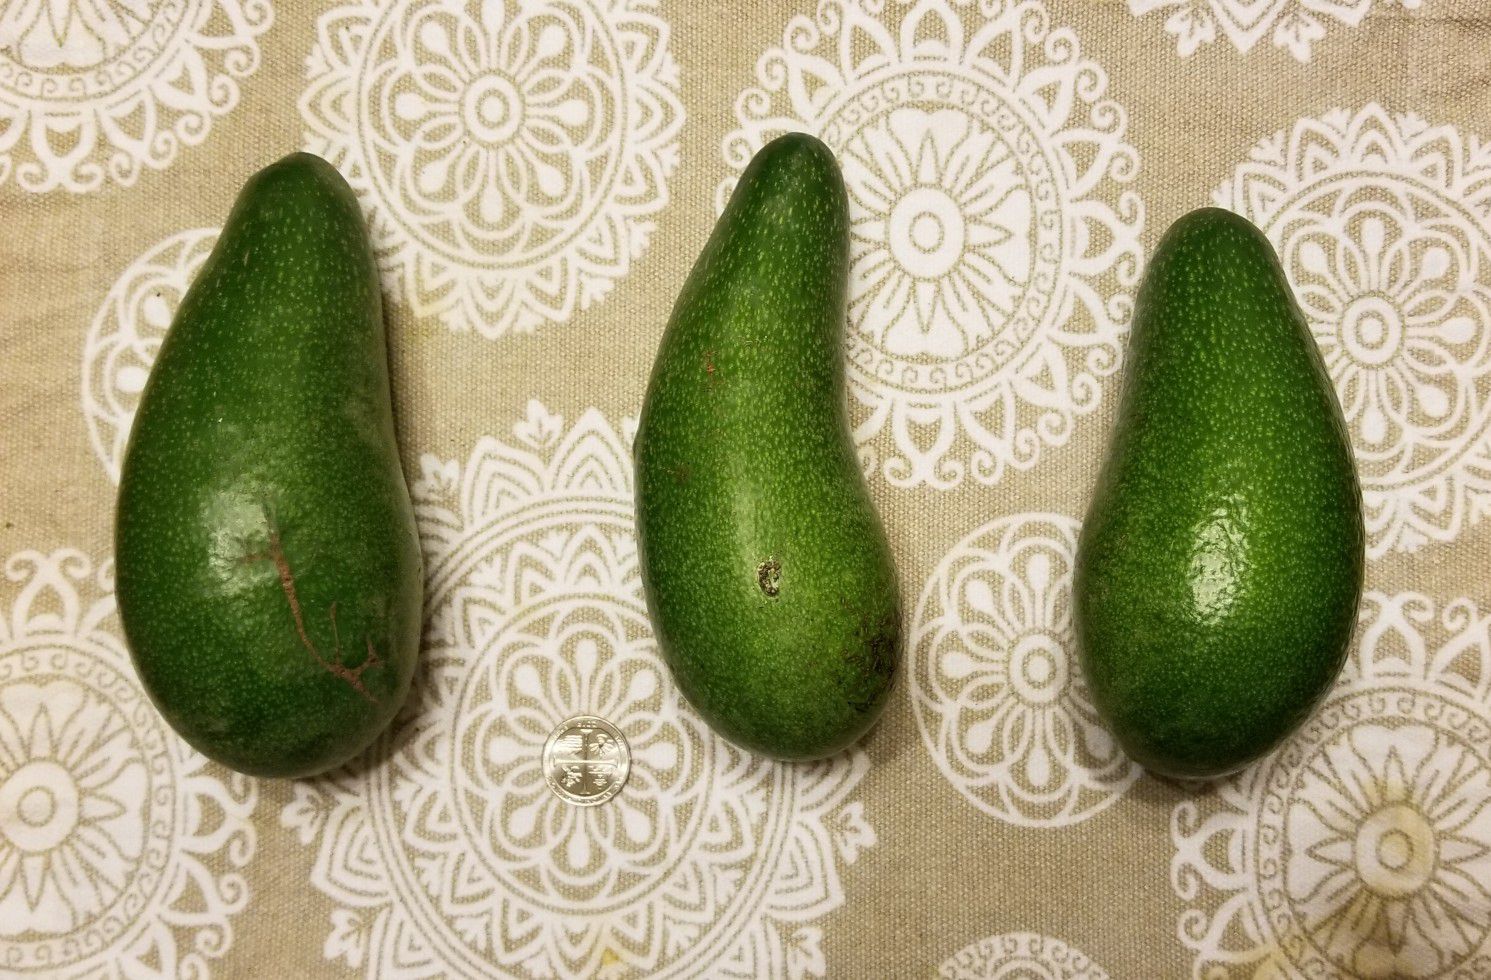 Organic Avocados